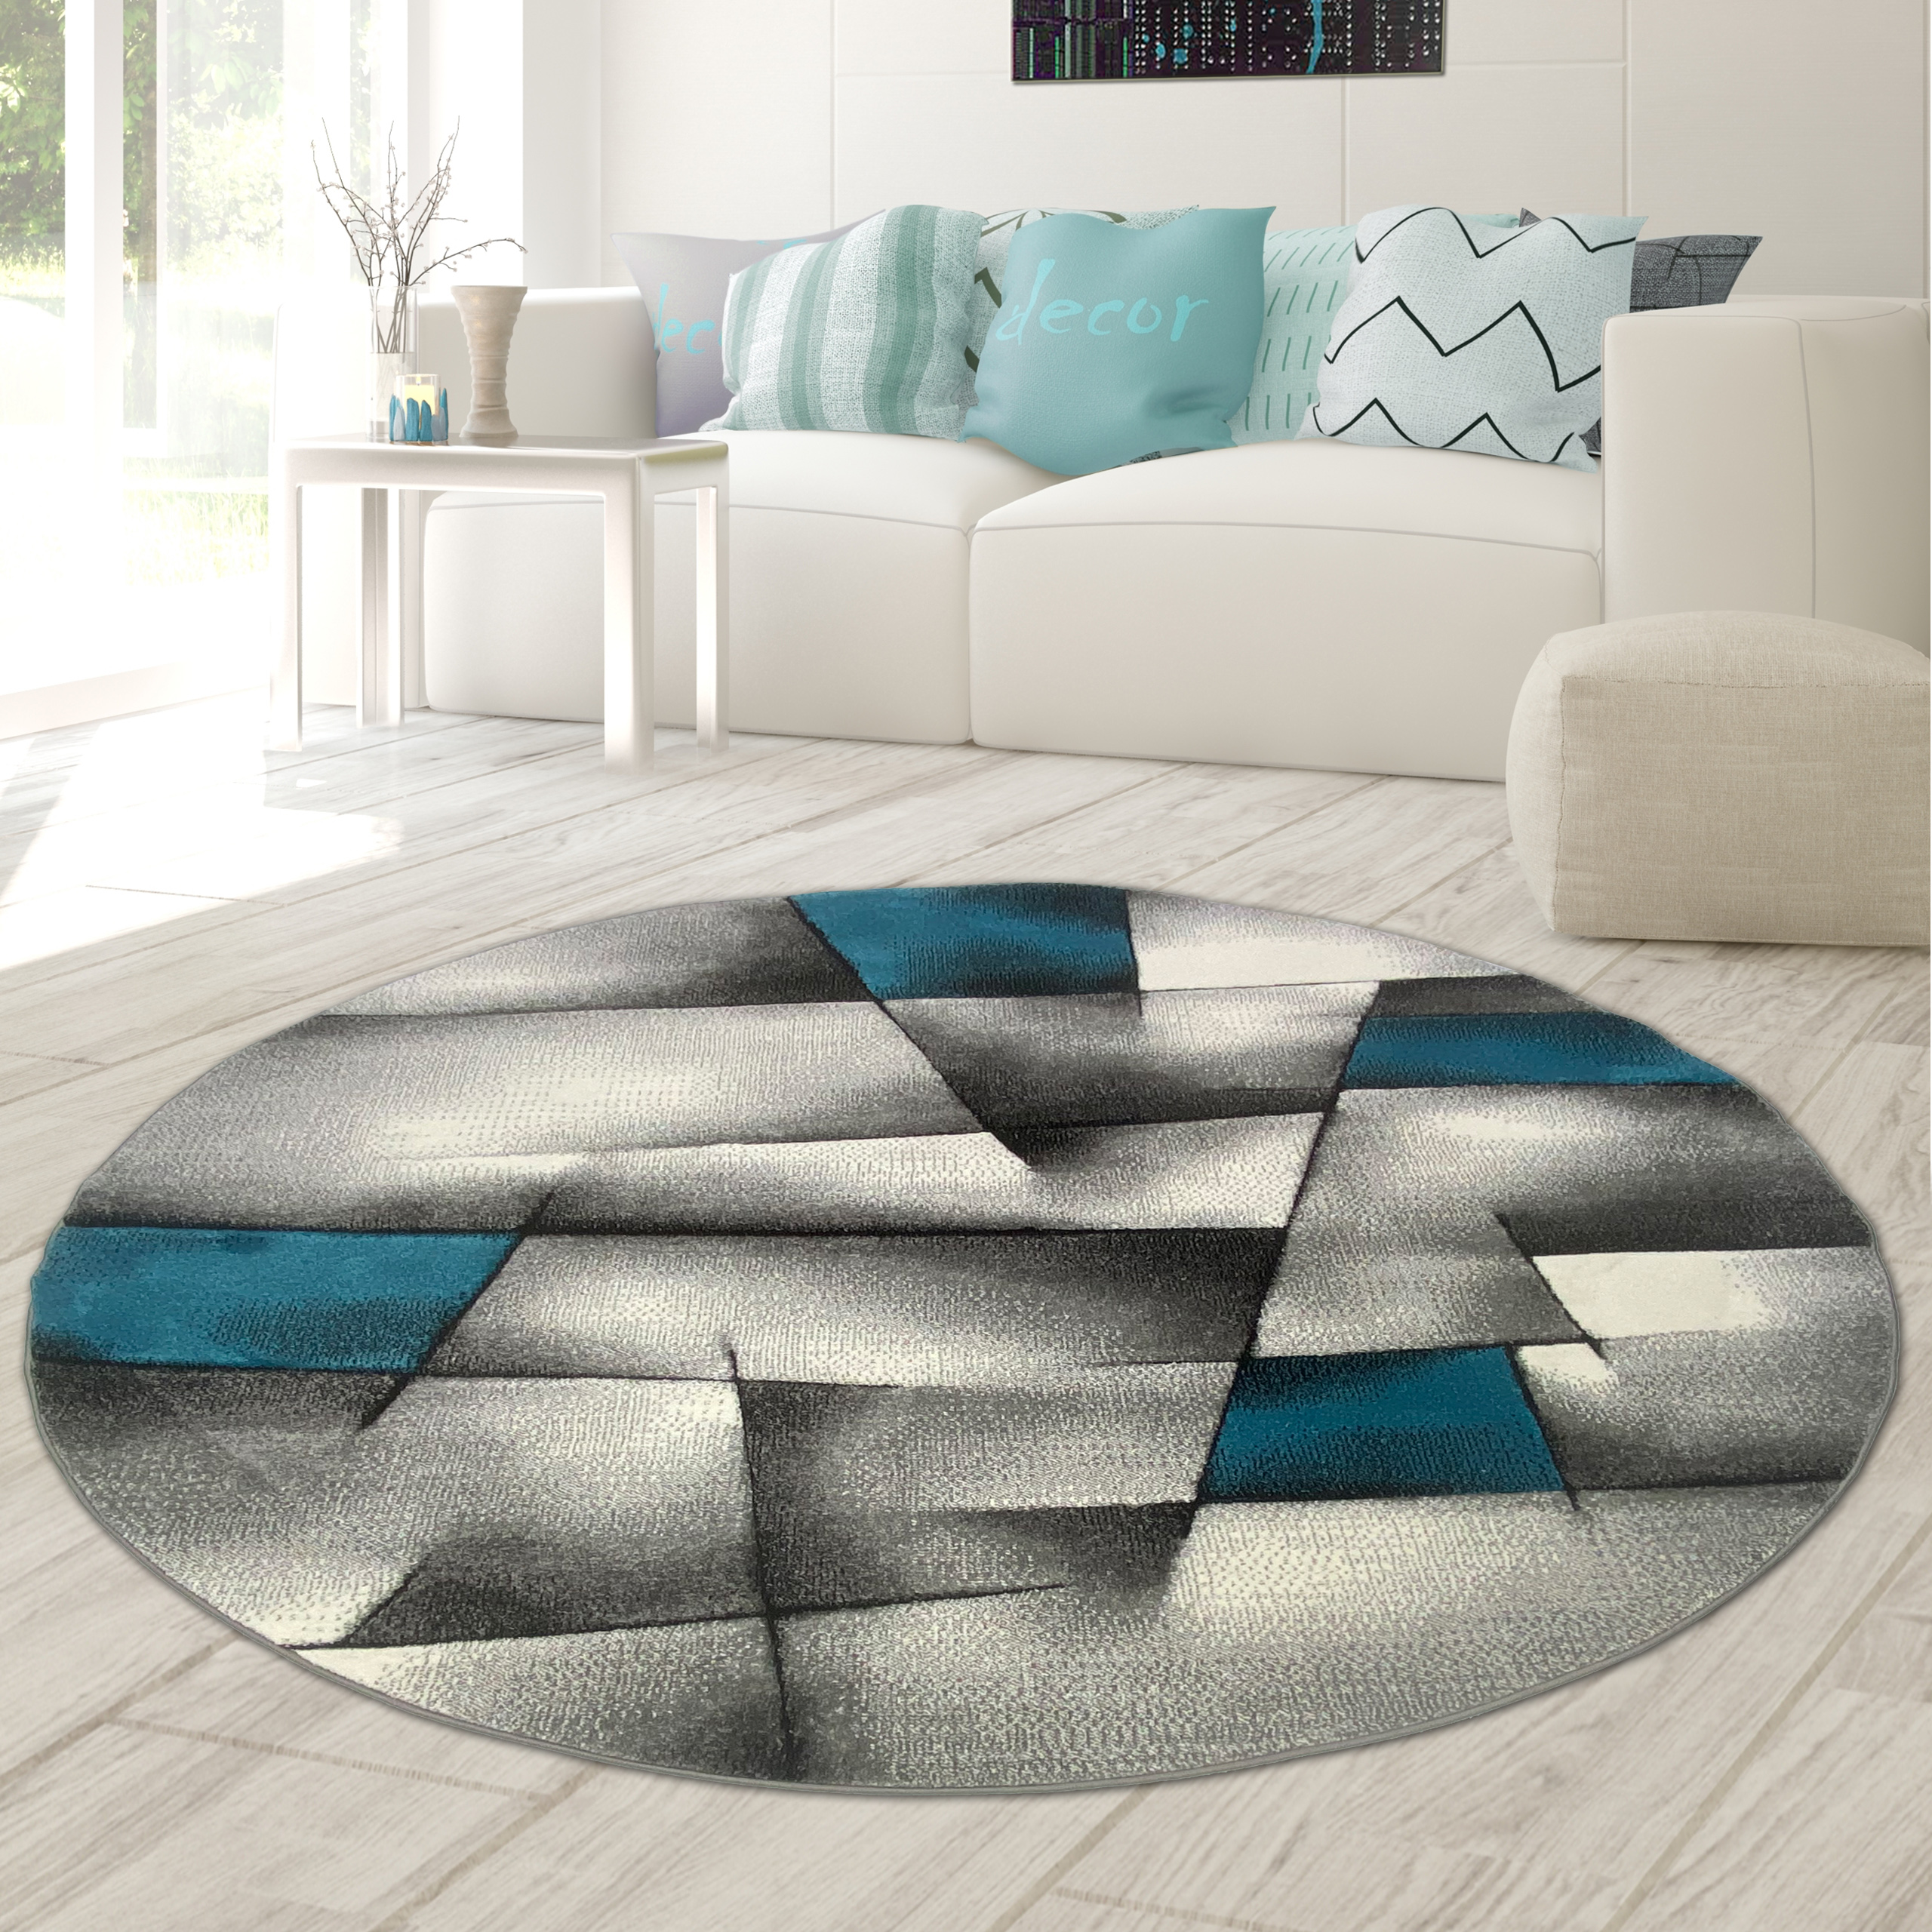 carpet carpets: designer -Traum cheap Teppich & and - dreams High-quality Modern at